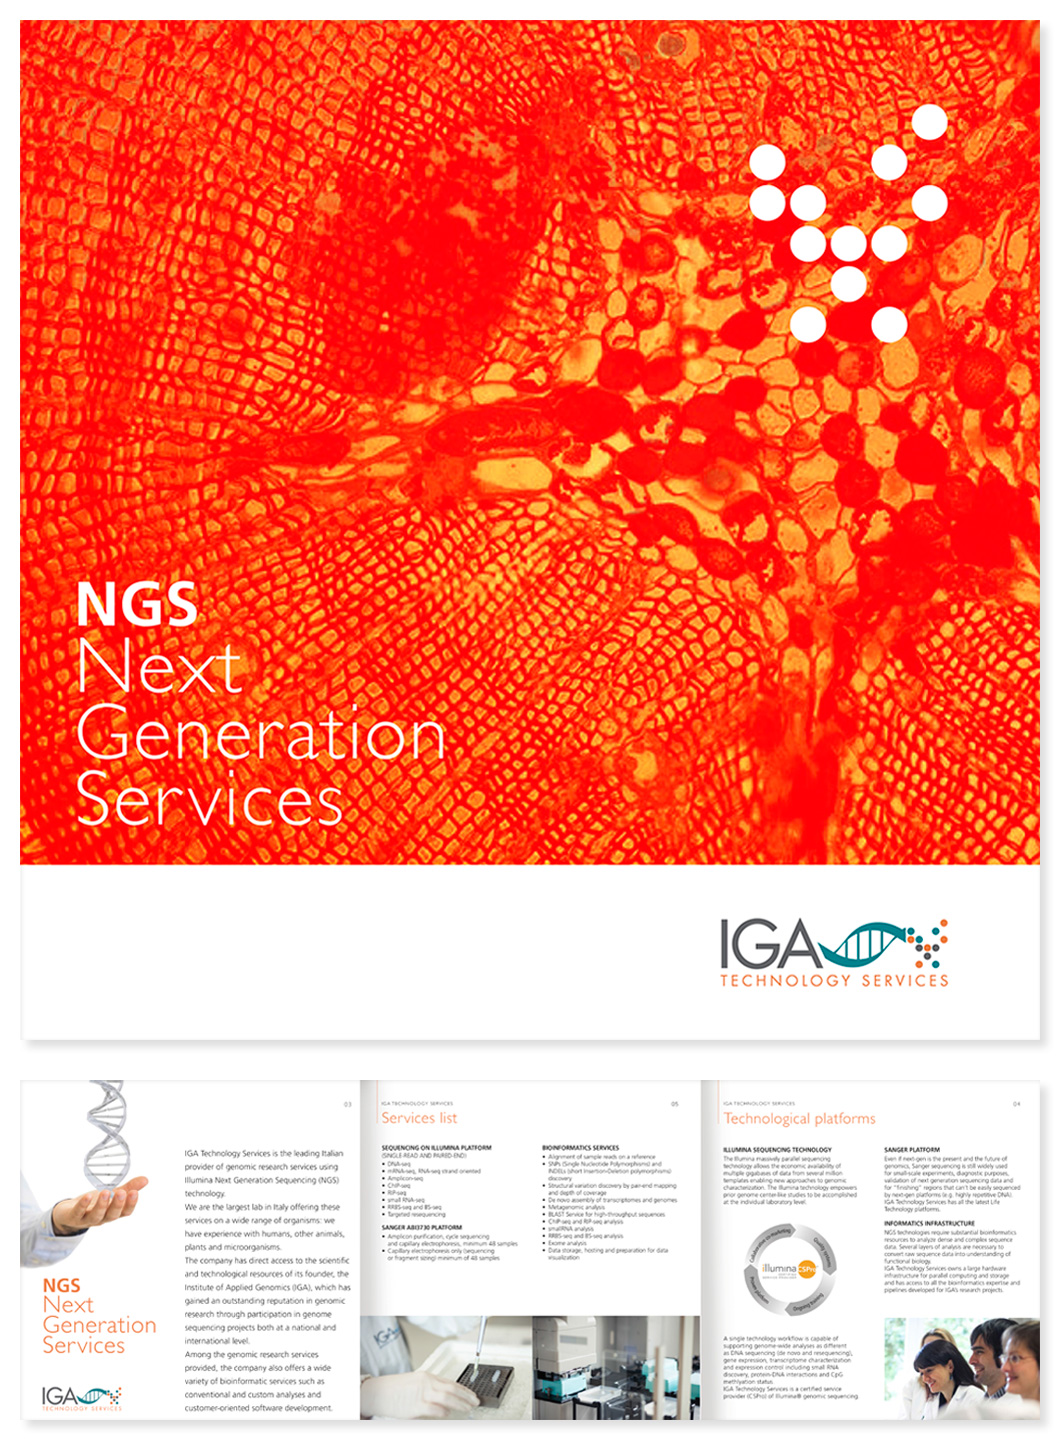 IGA Technology Services